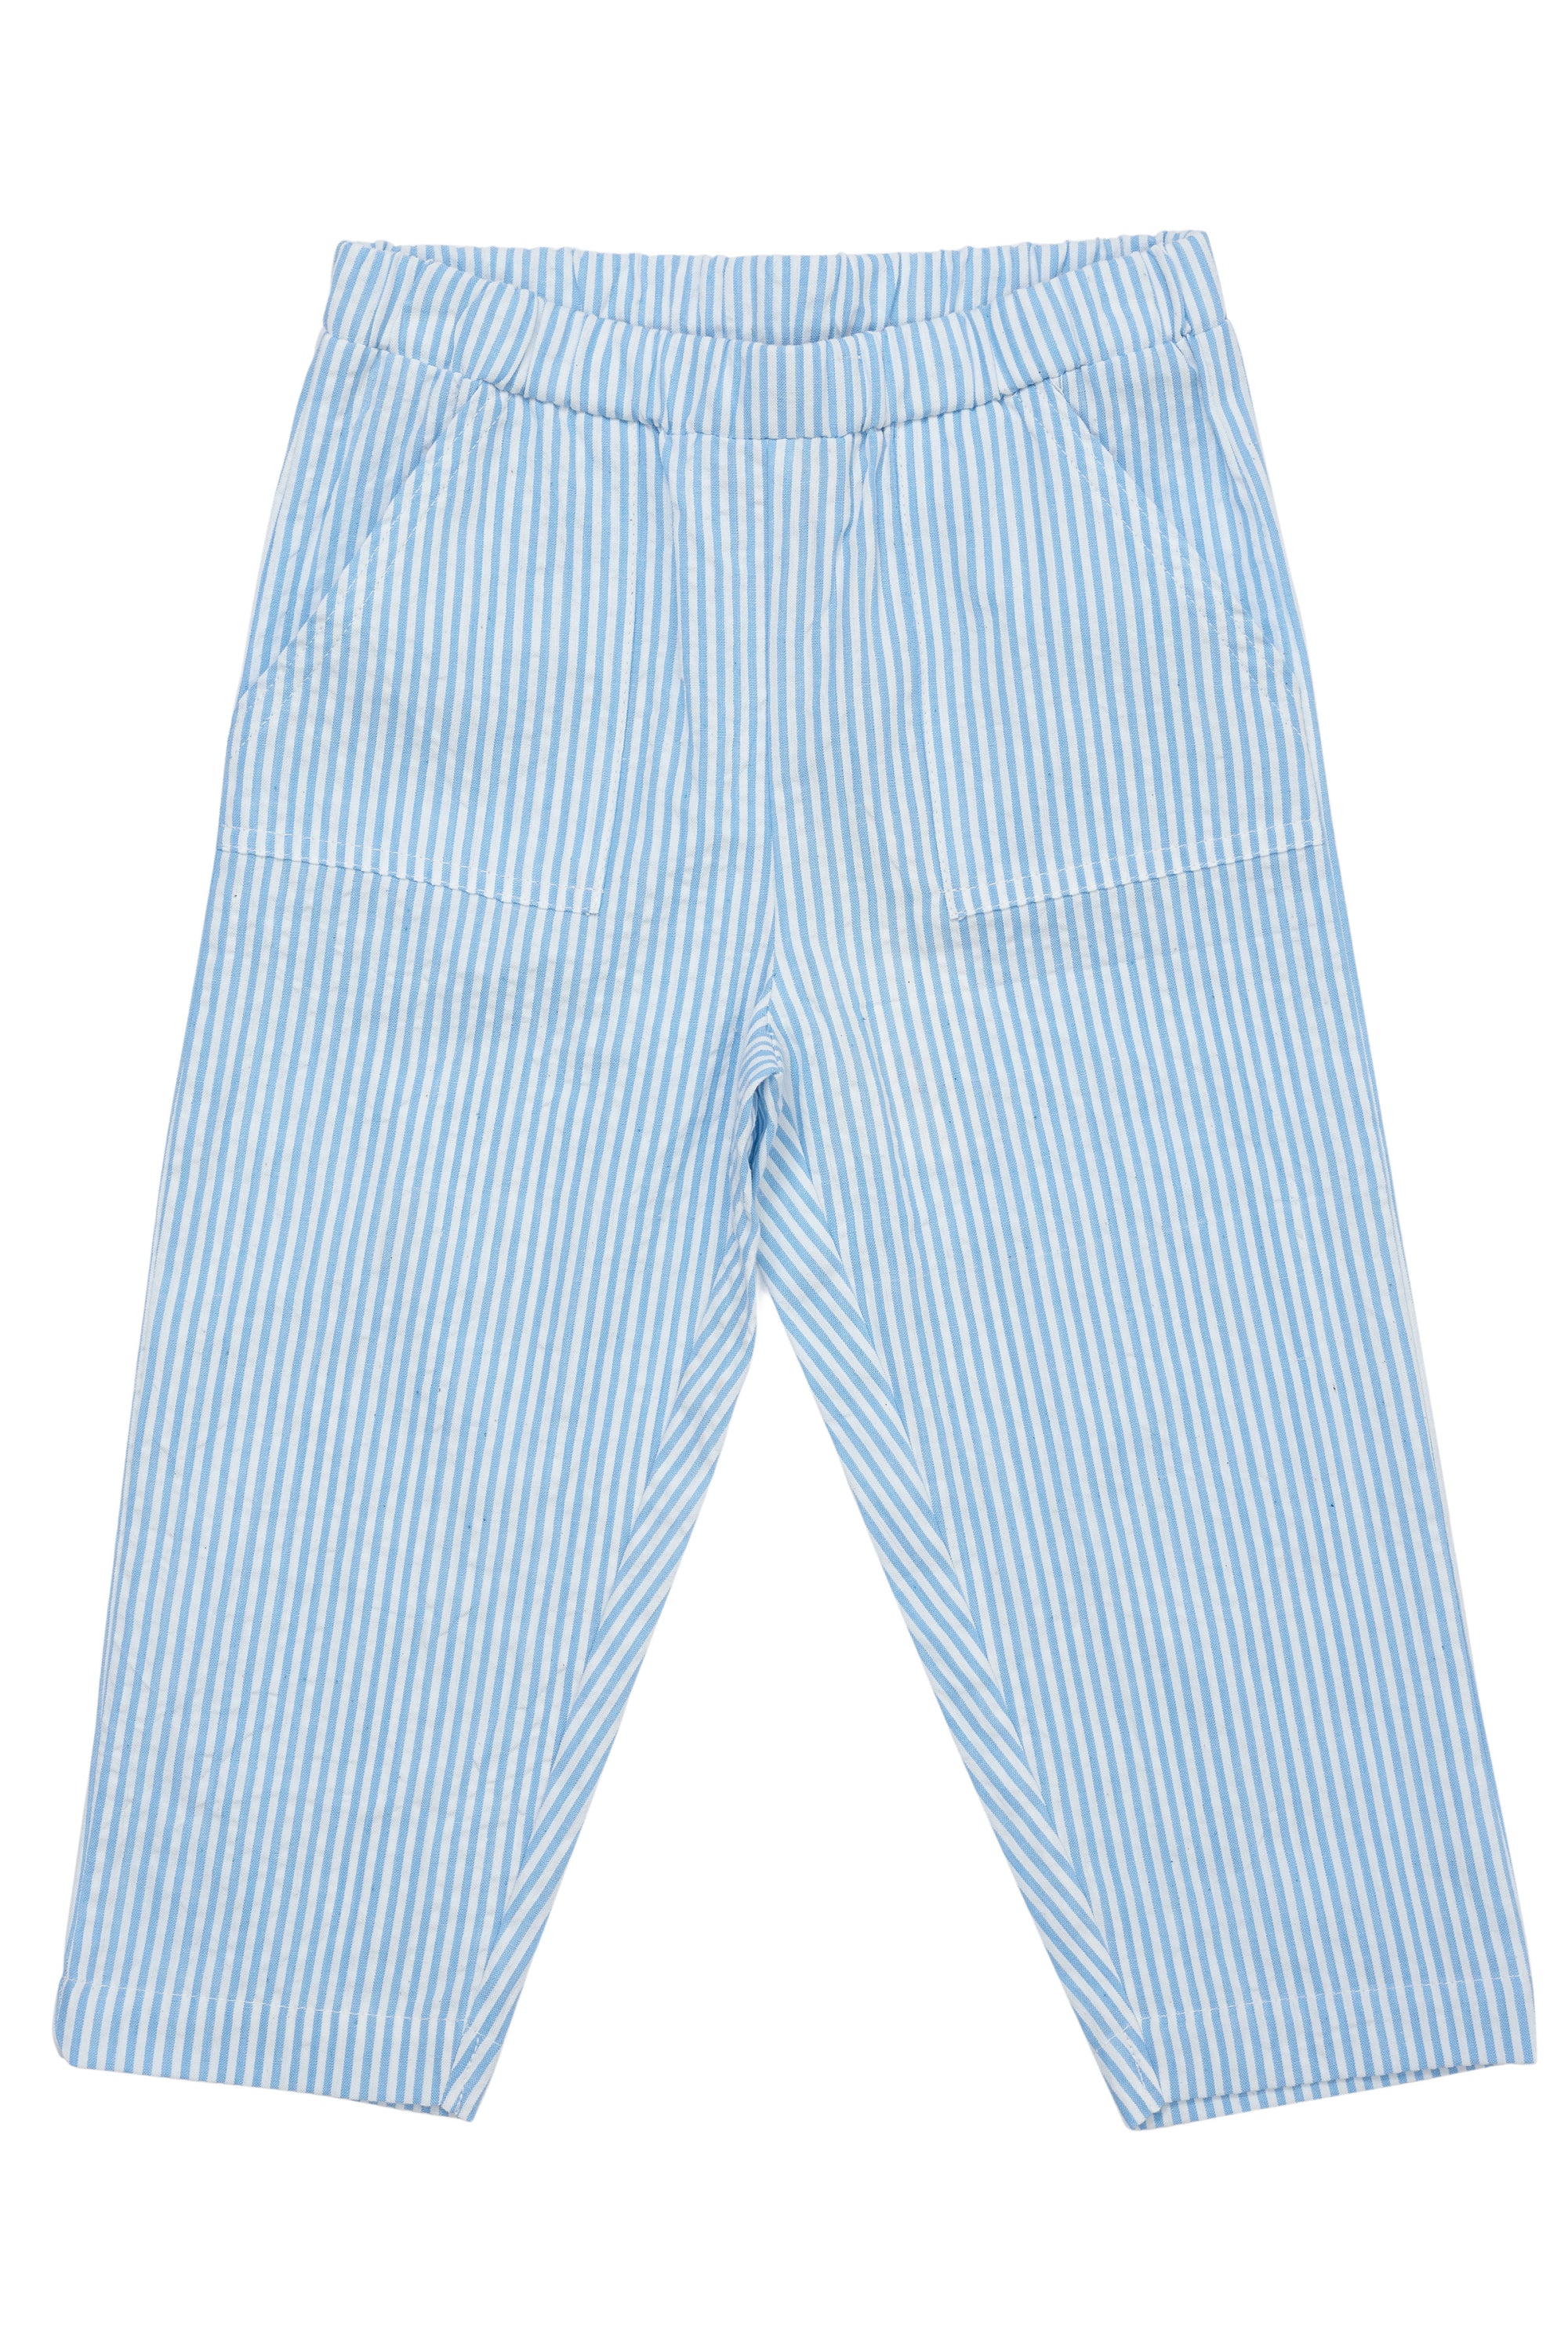 Billede af Copenhagen Colors Pants - Sky Blue/Cream stripe - 80 cm